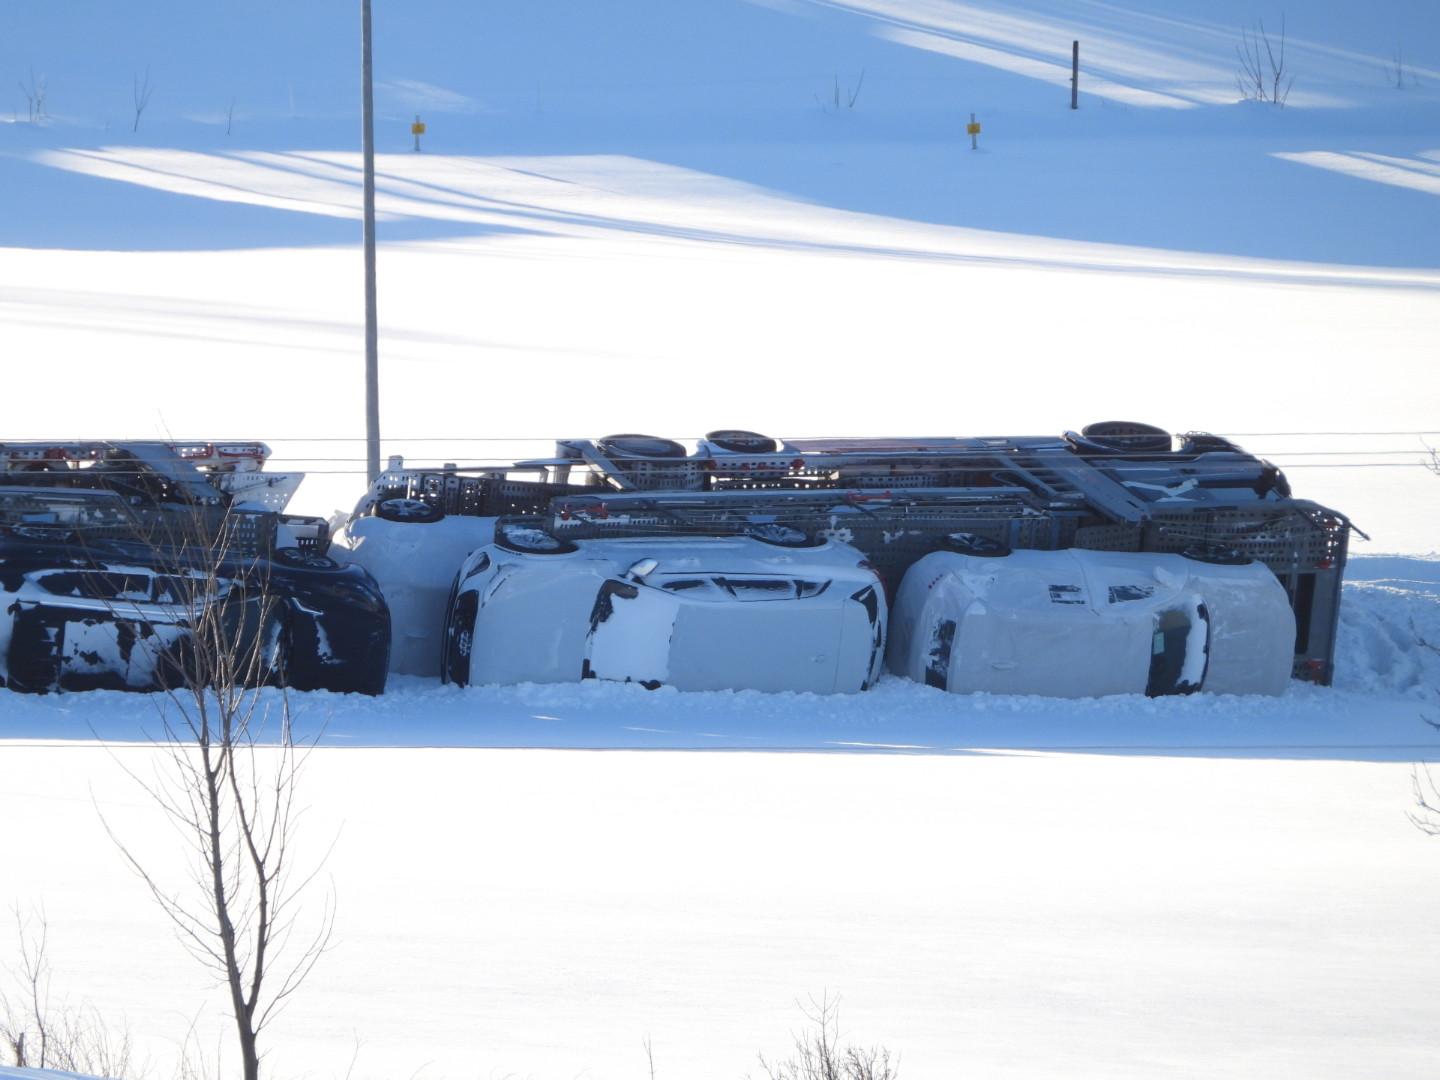 A wagon train loaded with cars overturned at Rauma